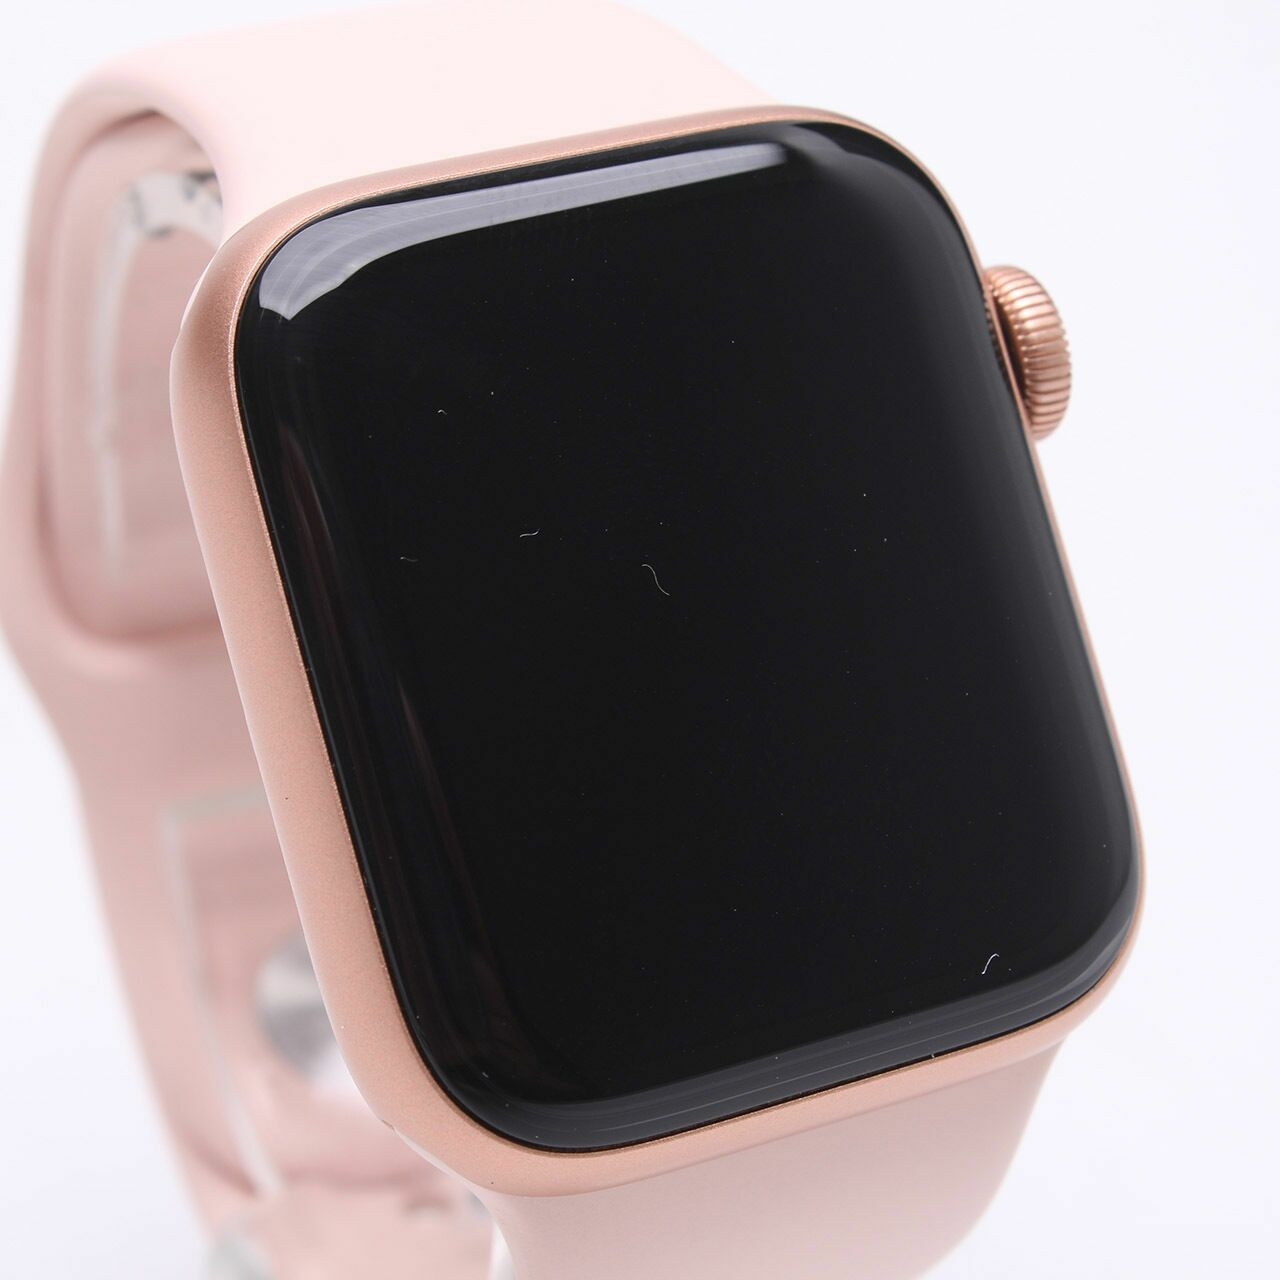 Apple Watch SE Gold Aluminum Case Pink Sand Sport Band Watch